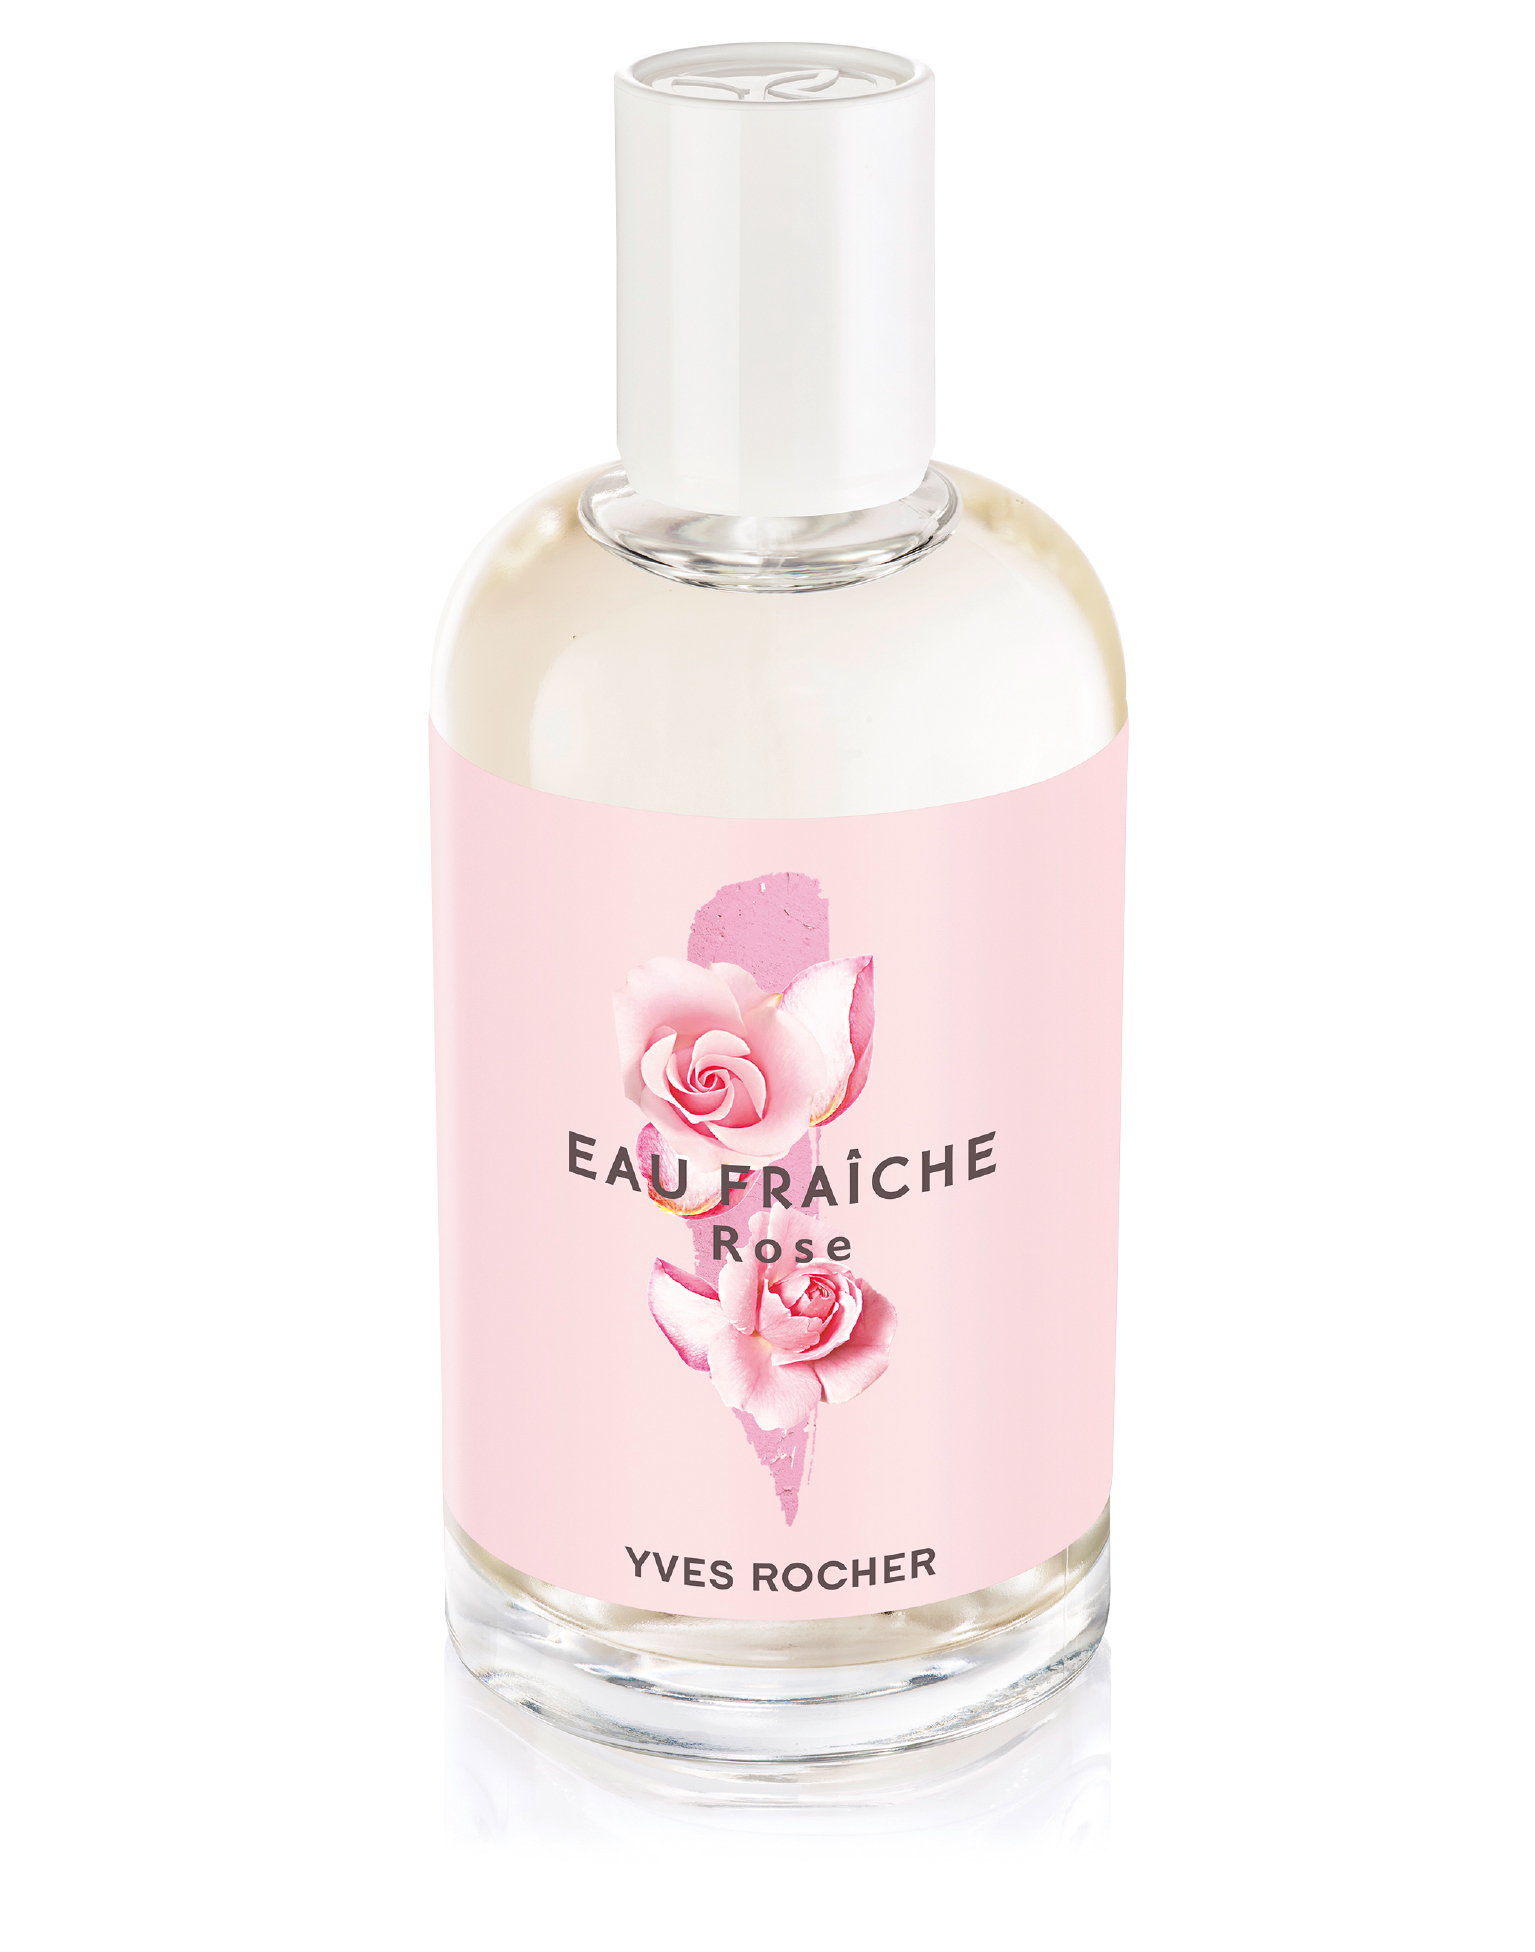 Parfum Yves Rocher - Homecare24